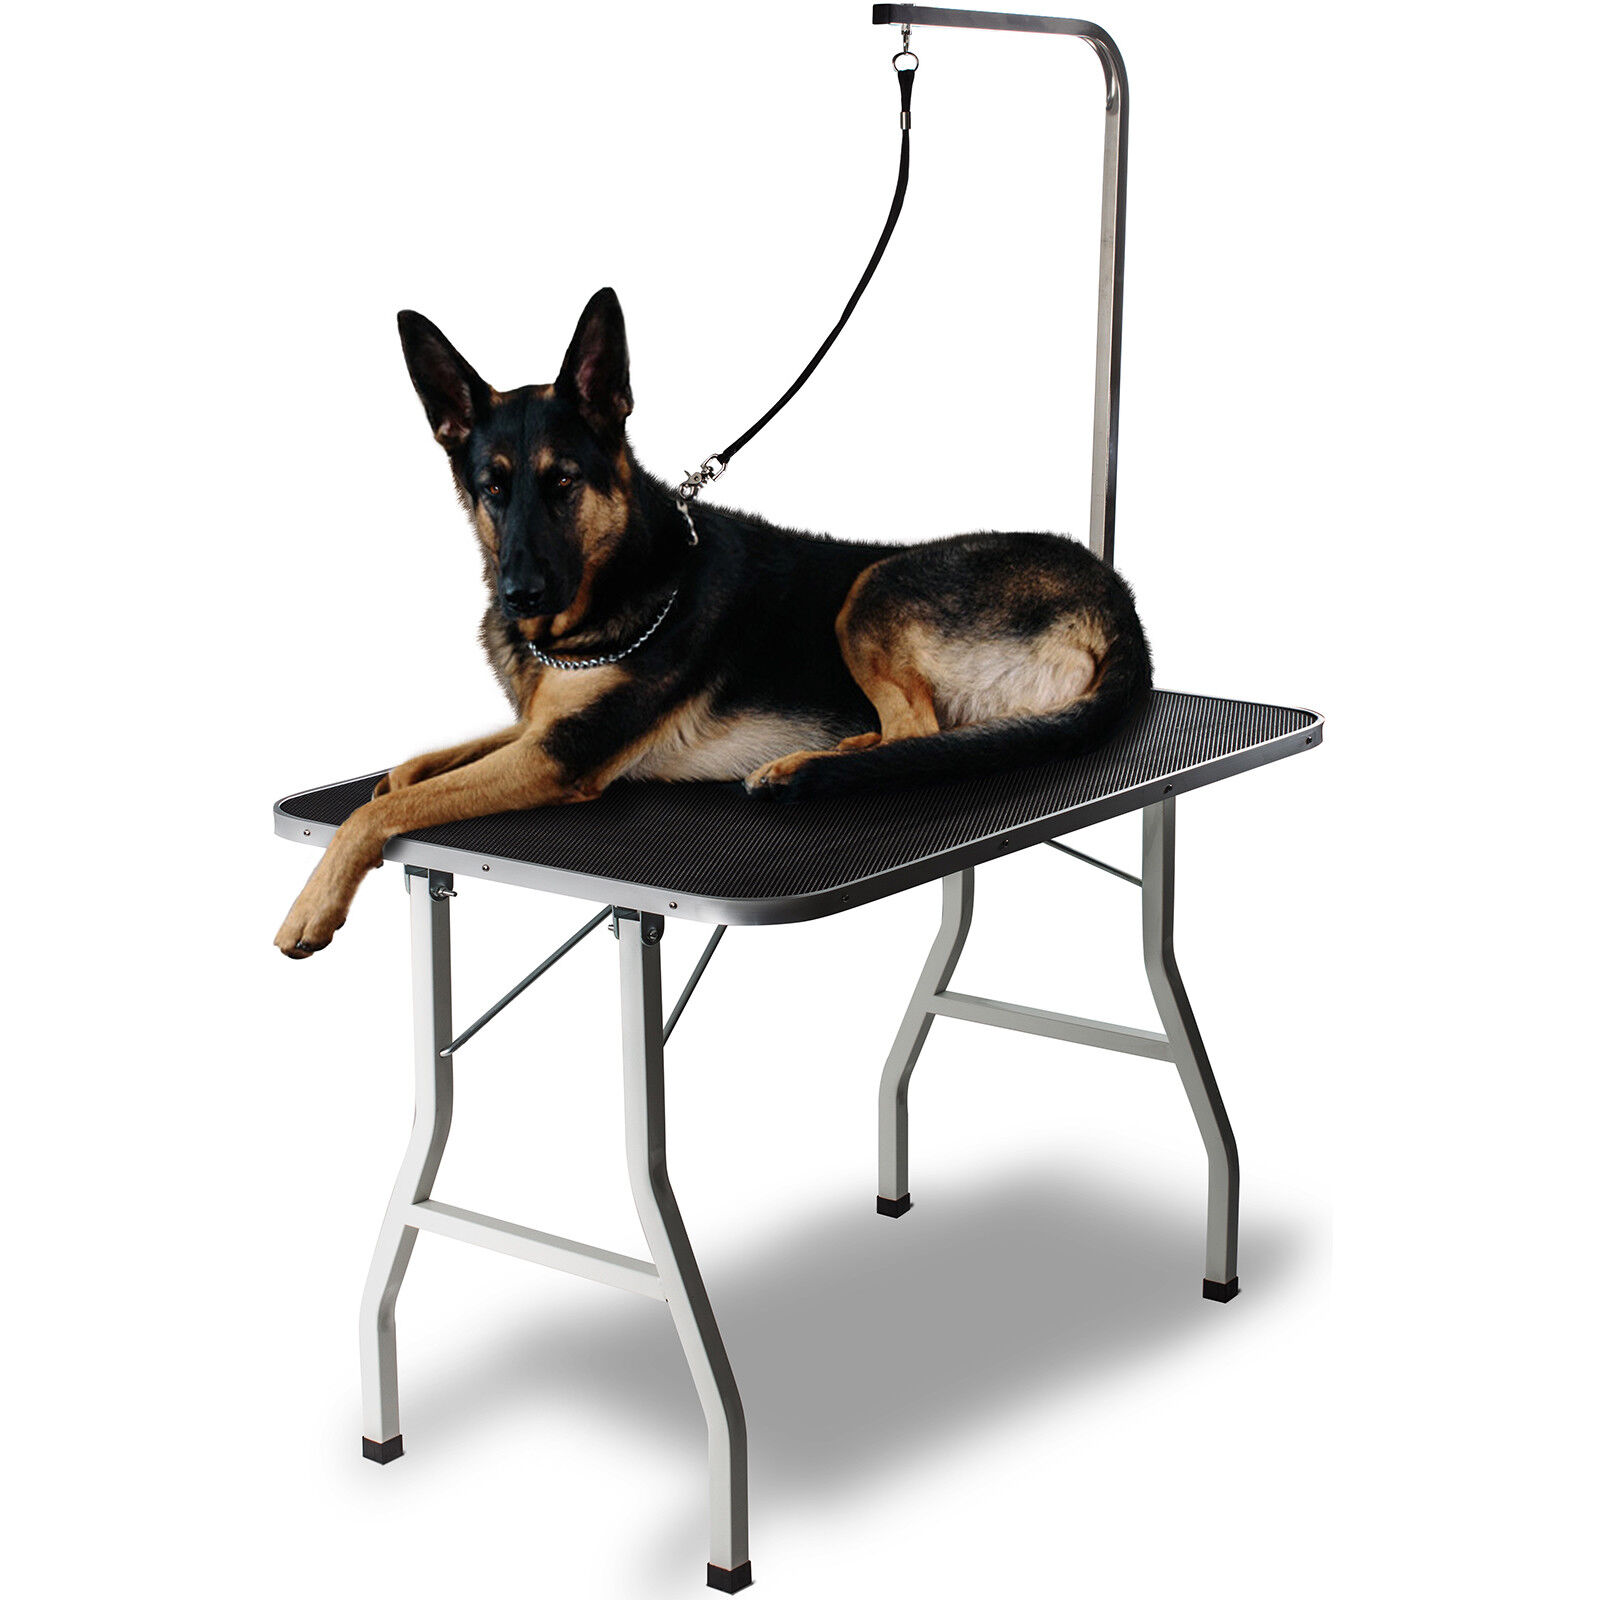 36" Large Pet Grooming Foldable Table Dog Cat Adjustable Arm Groom Connect OxGord PTGR01BK